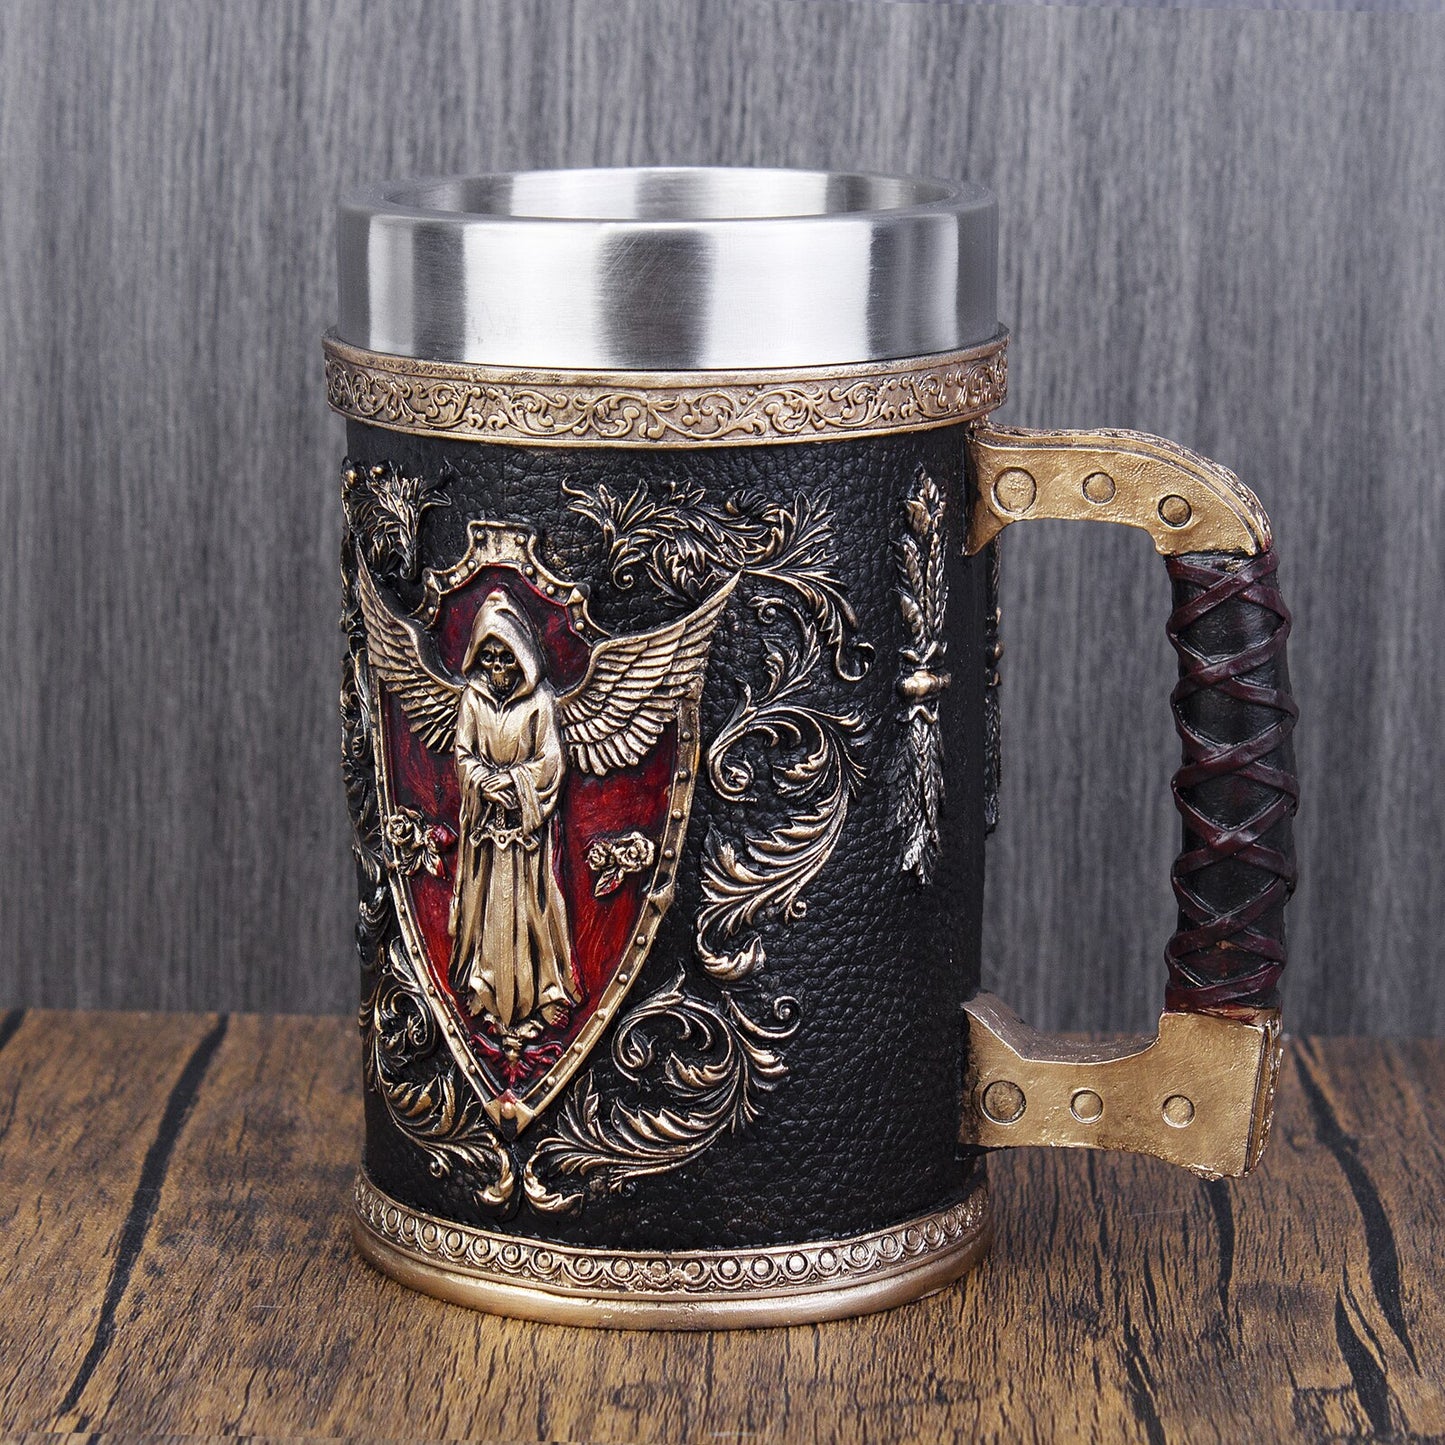 Wing Sword Shield Skull Cup Stainless Steel 3D Grim Reaper Mugs for Retro Beer Coffee Mug